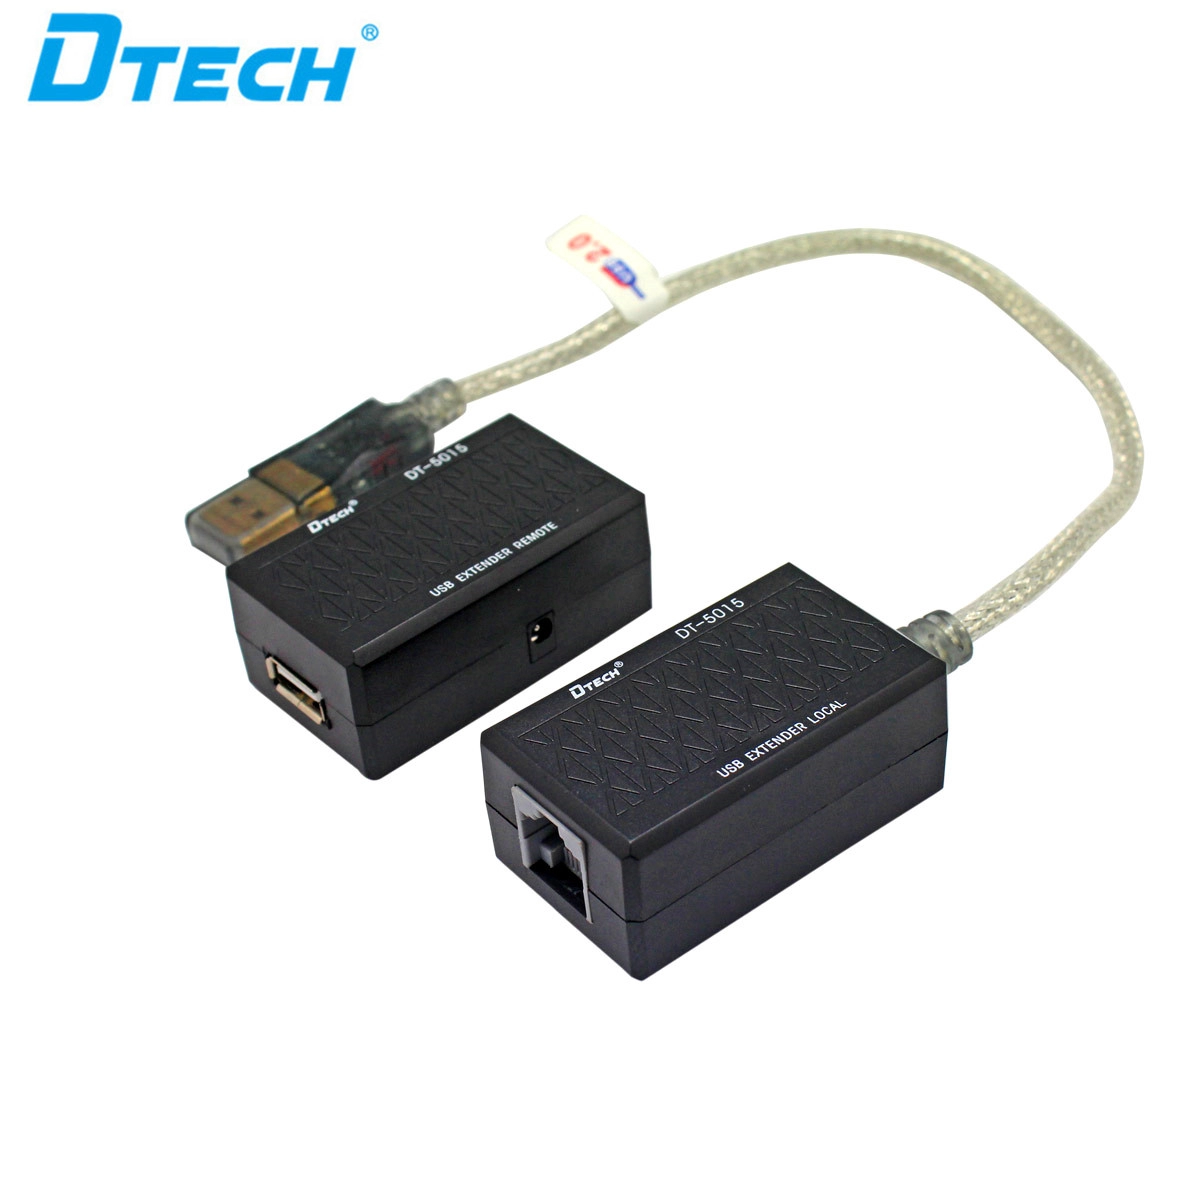 Extensor DTECH DT-5015 USB 60M por cabo lan